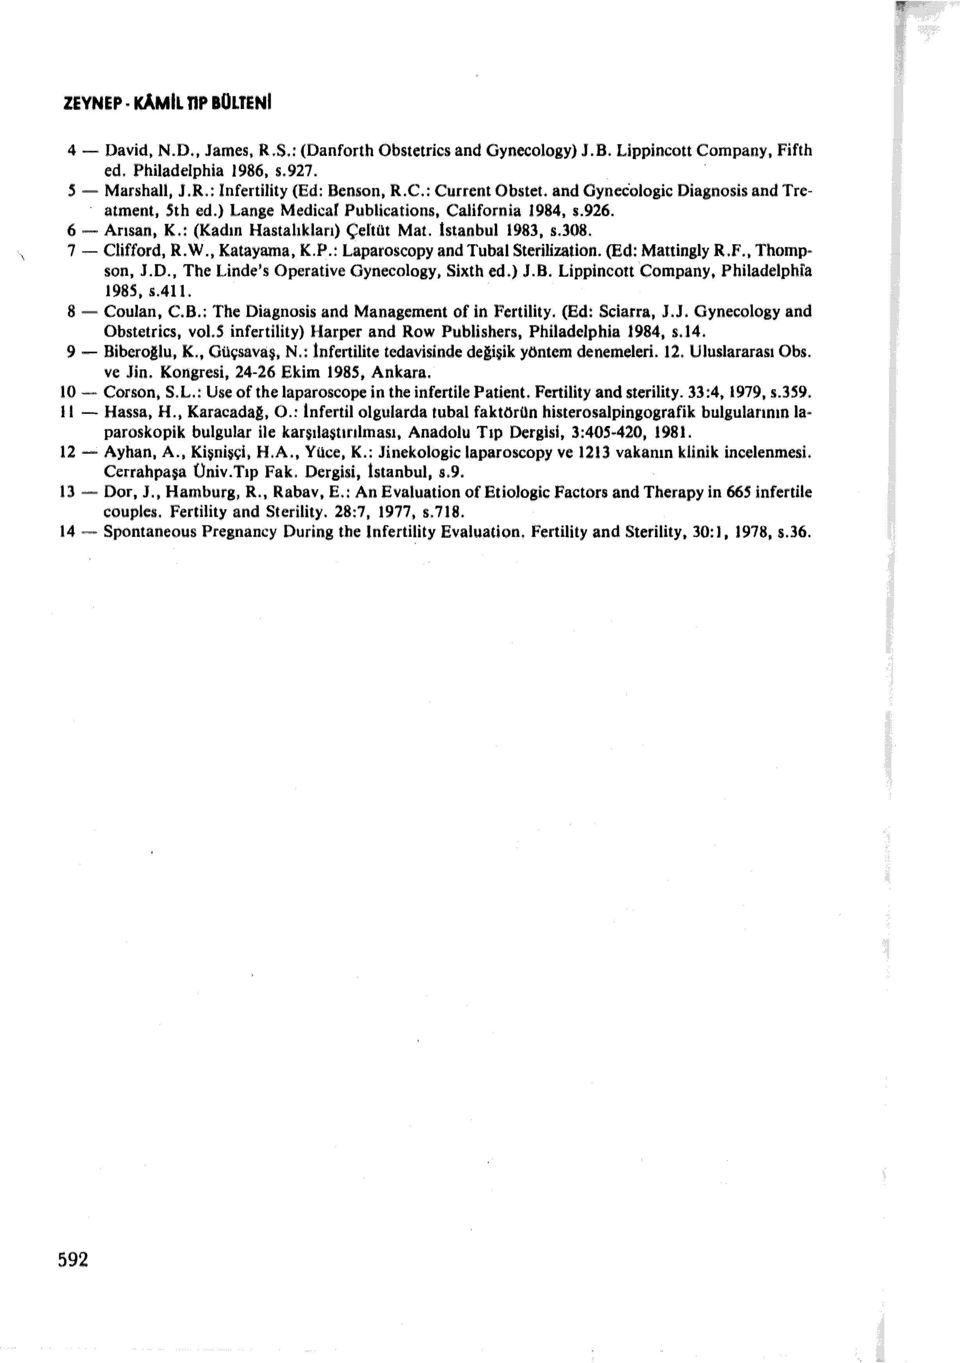 7 - Clifford, R.W.. Katayama, K.P.: Laparoscopy and Tubal Sterilization. (Ed: Mattingly R.F., Thompson, J.D., The Linde's Operative Oynecology, Sixth ed.) J.B.